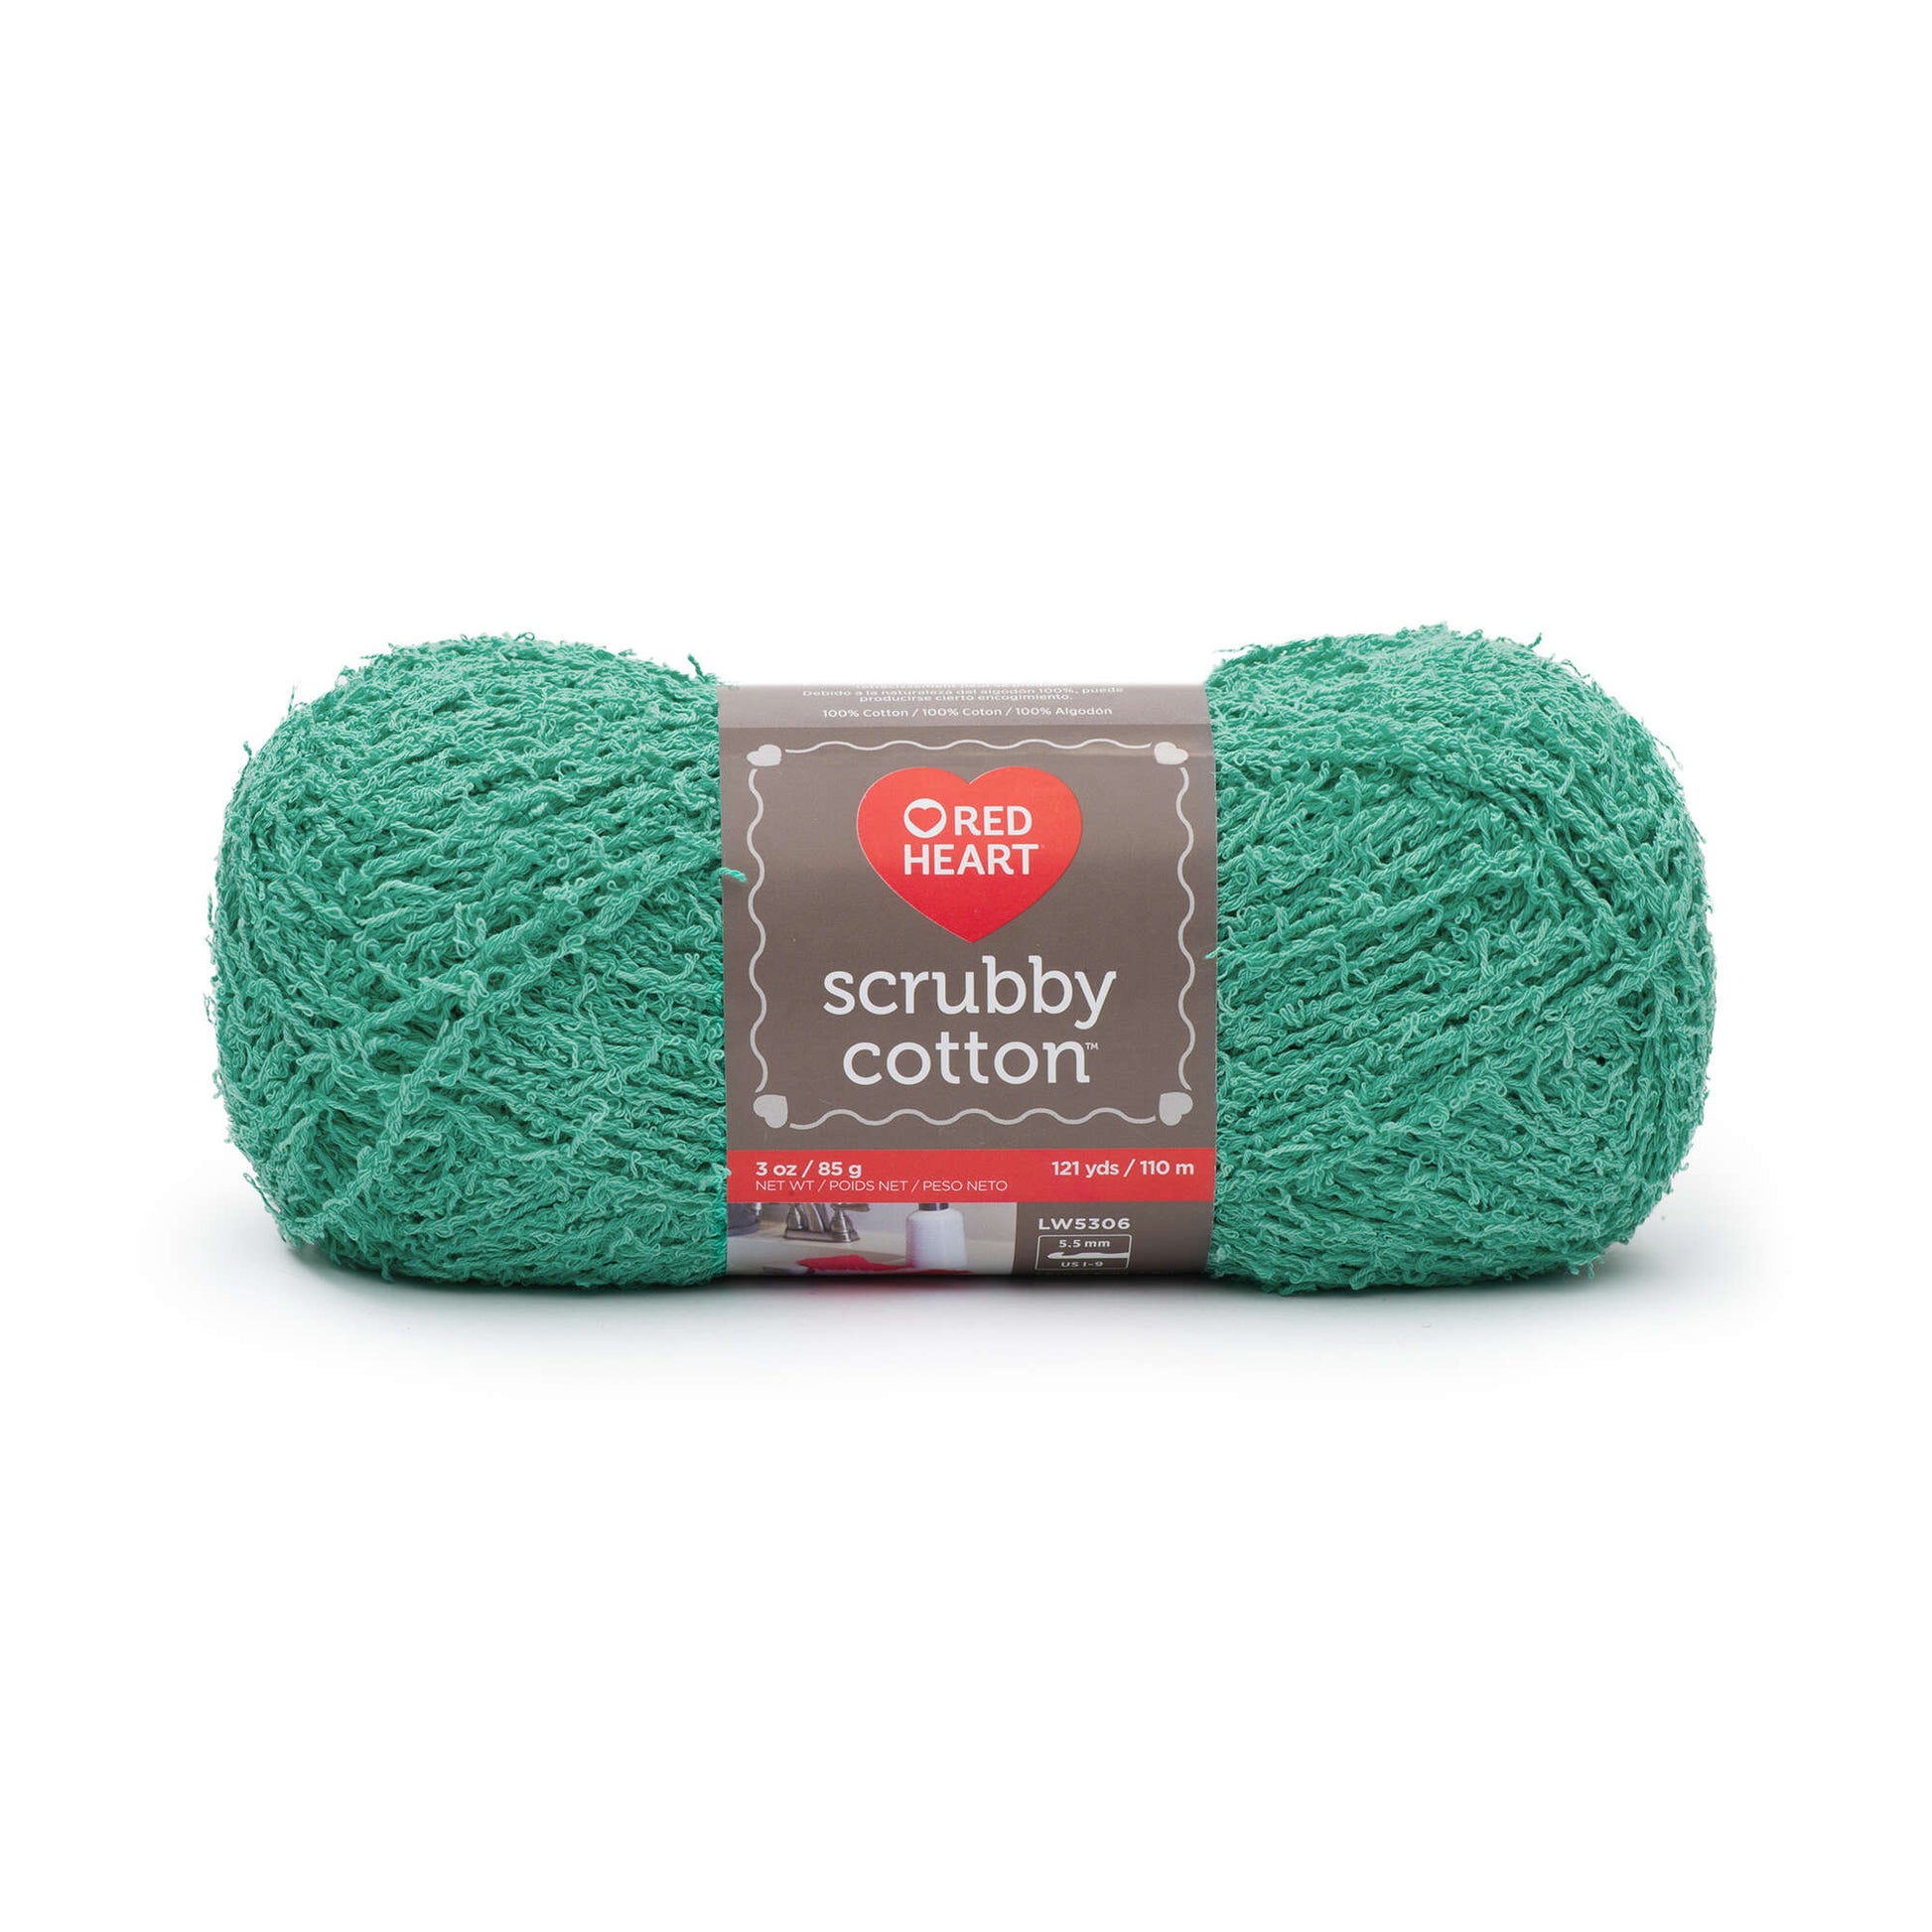 Red Heart Scrubby Cotton Yarn - Clearance shades Jade